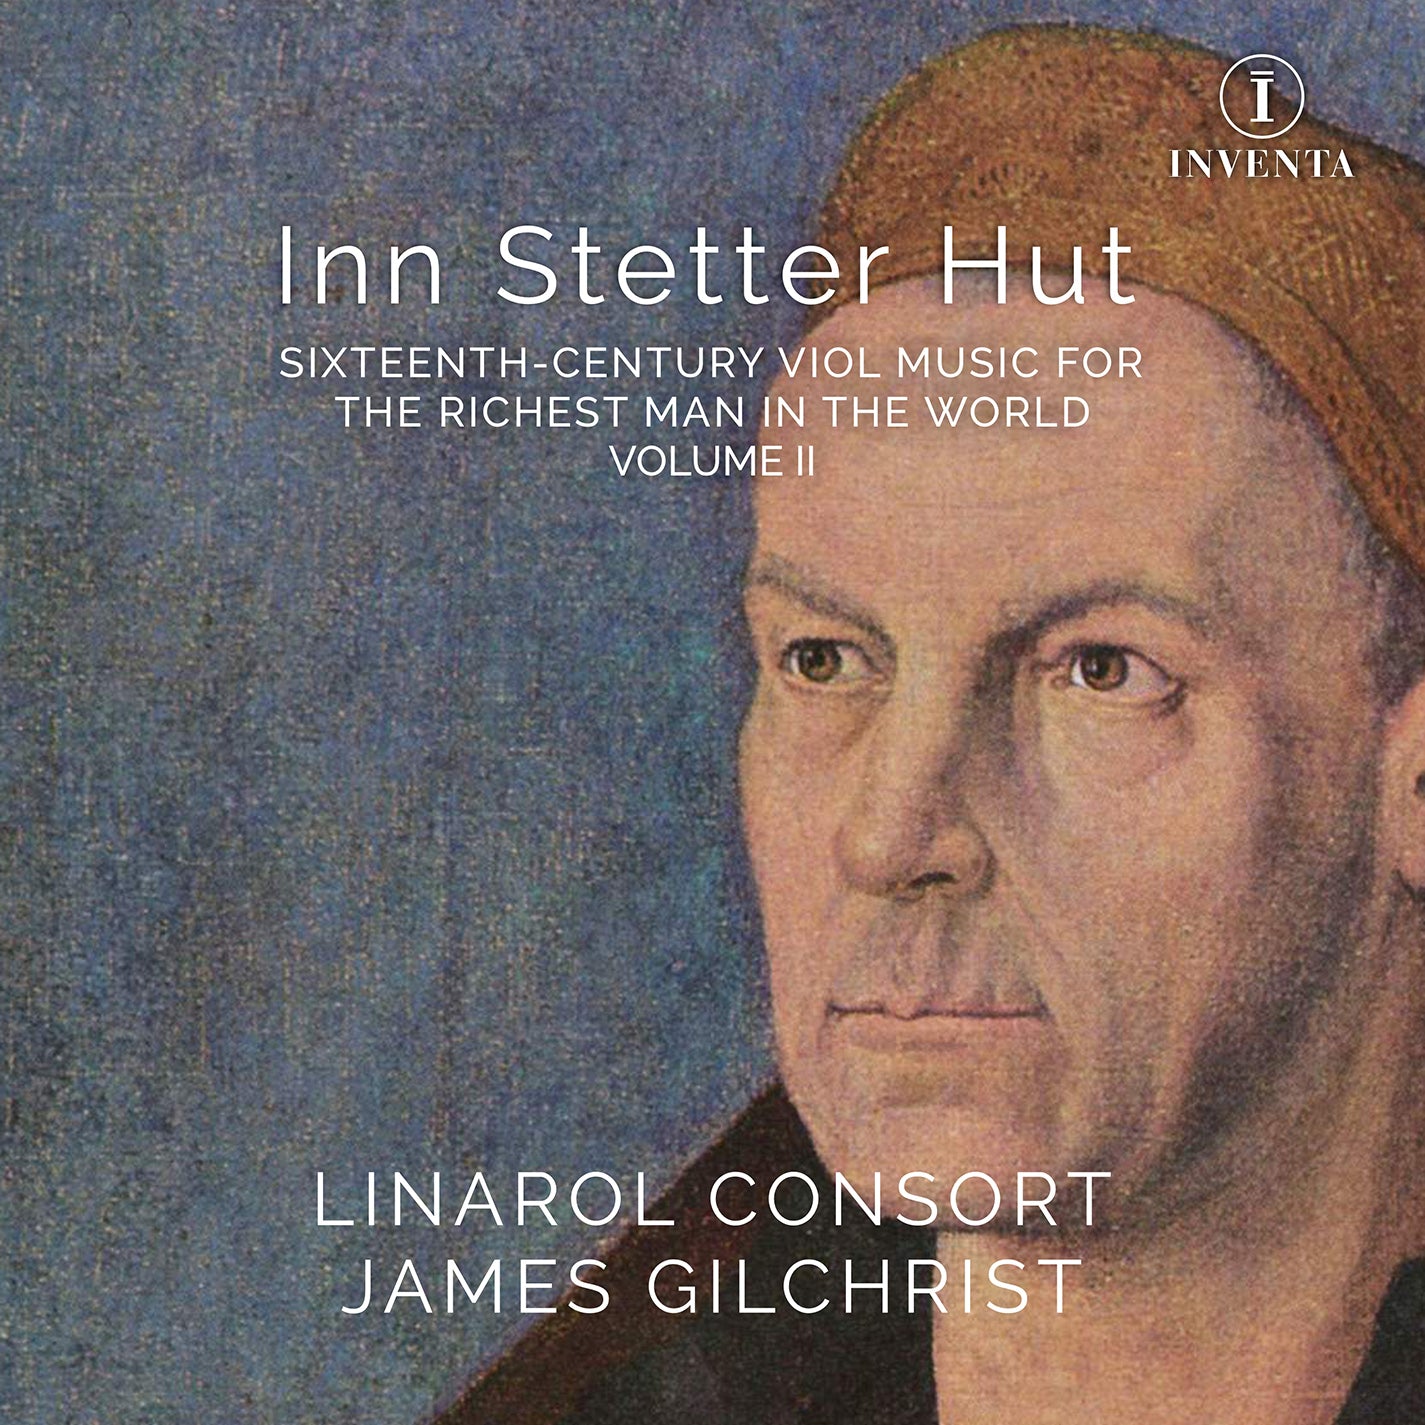 Inn Stetter Hut - 16th-Century Viol Music, Vol. 2 / Gilchrist, Linarol Consort